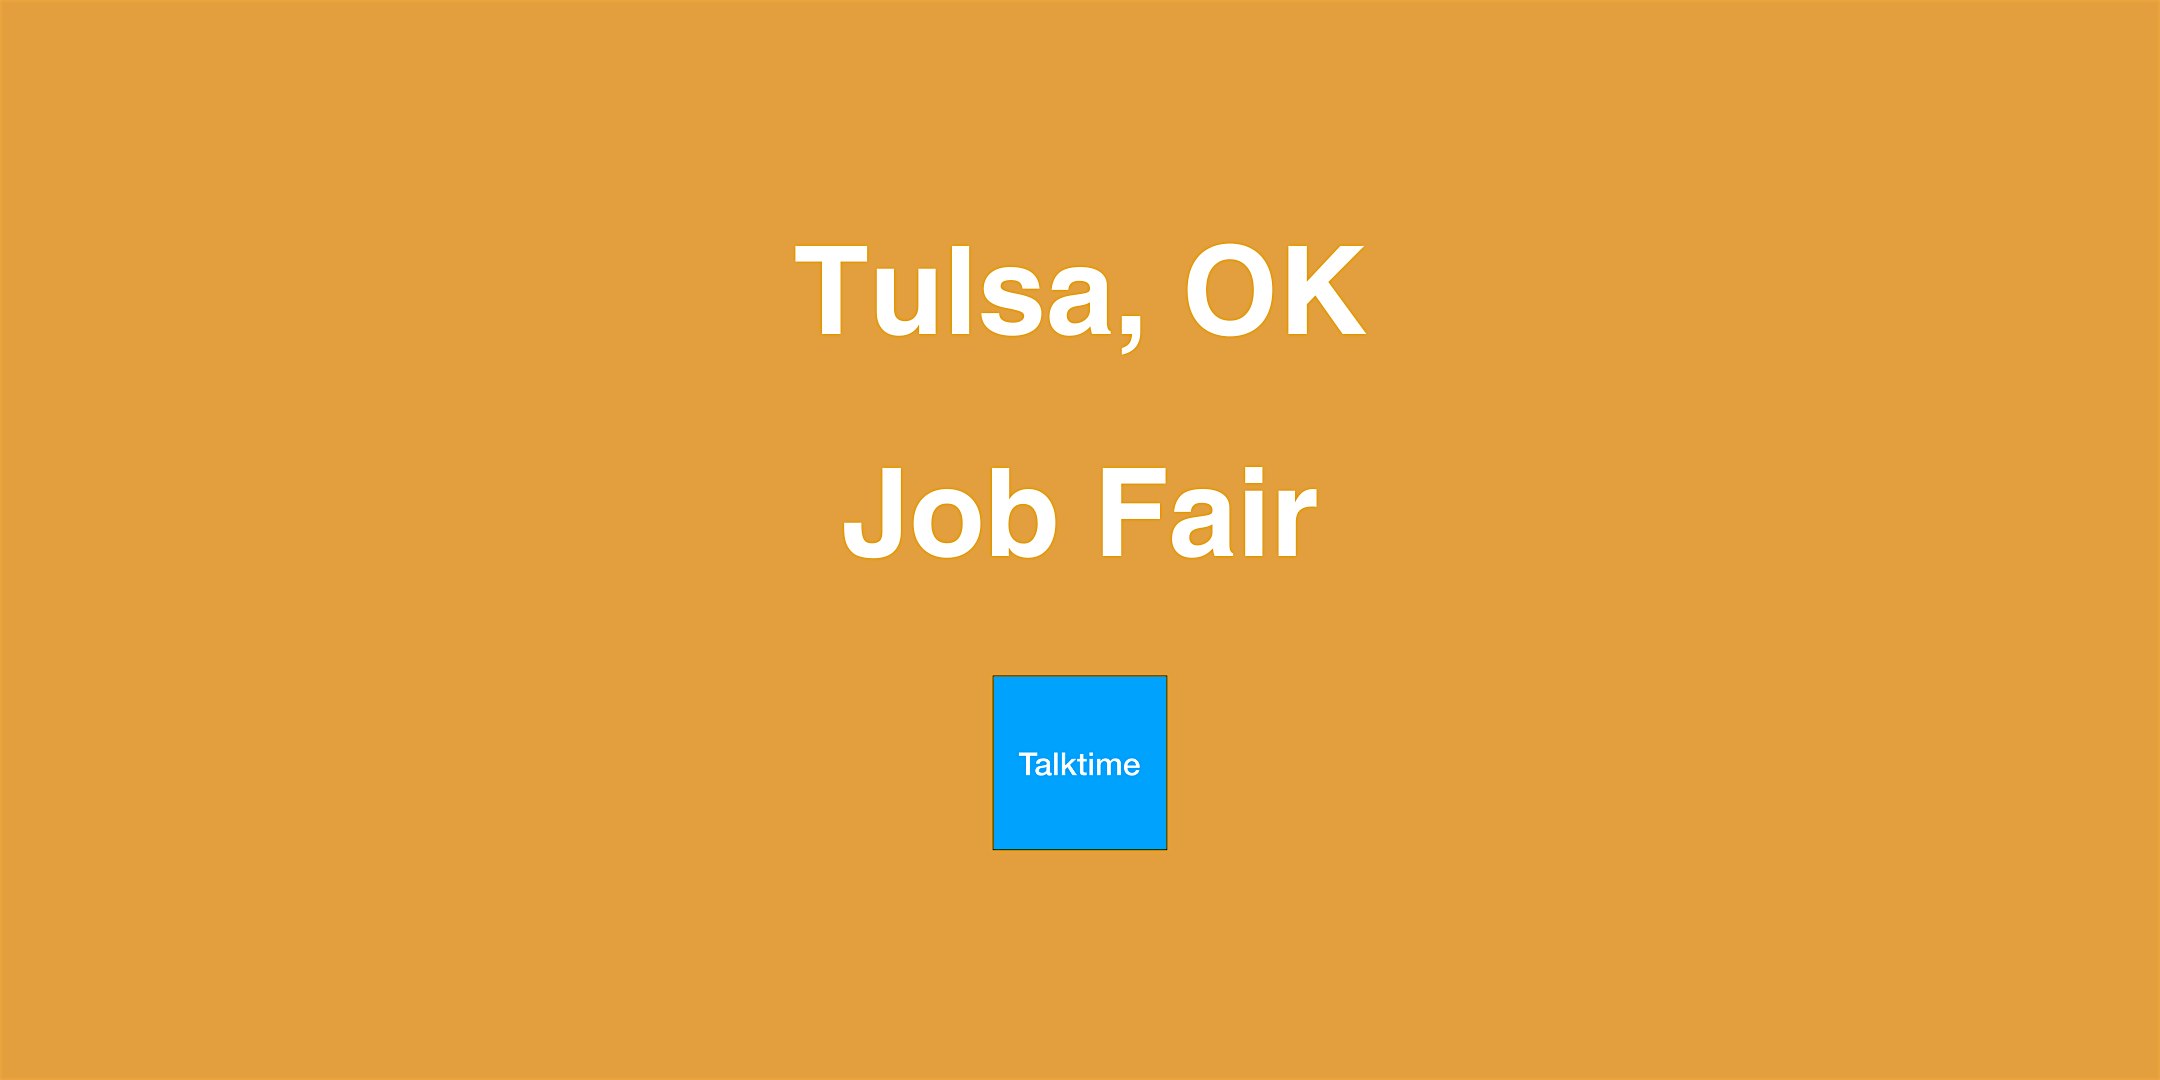 Job Fair - Tulsa